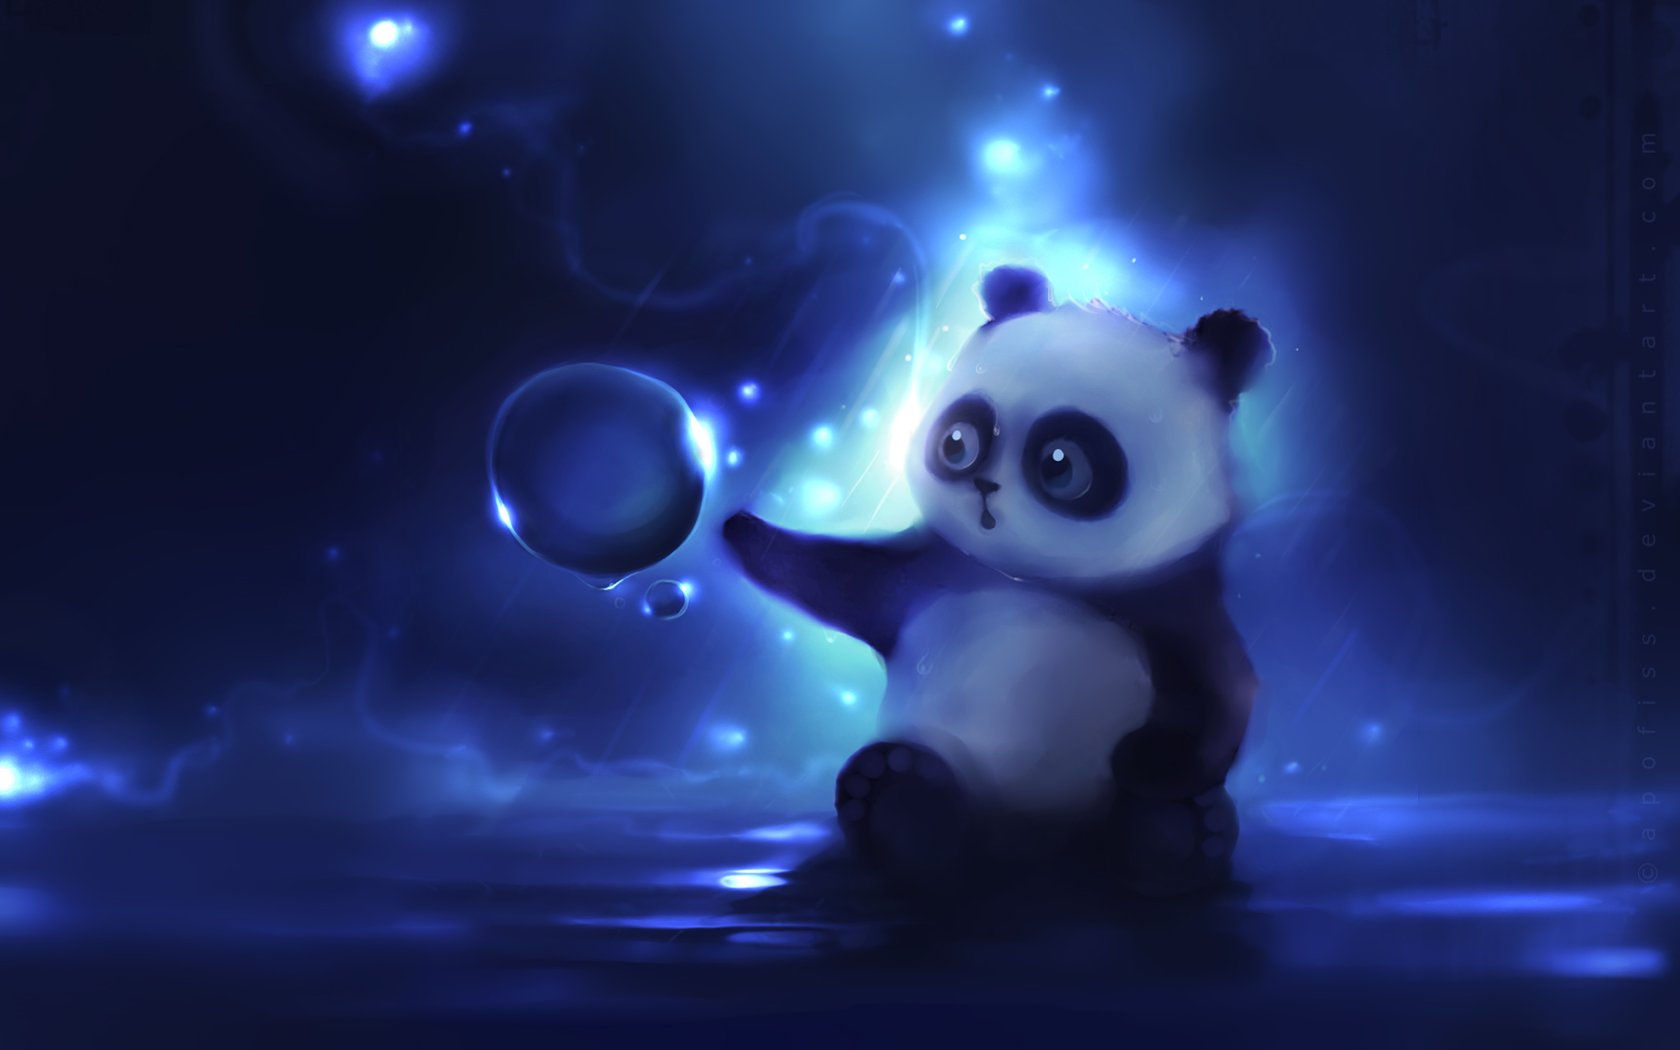 animals DeviantART panda bears artwork Apofiss